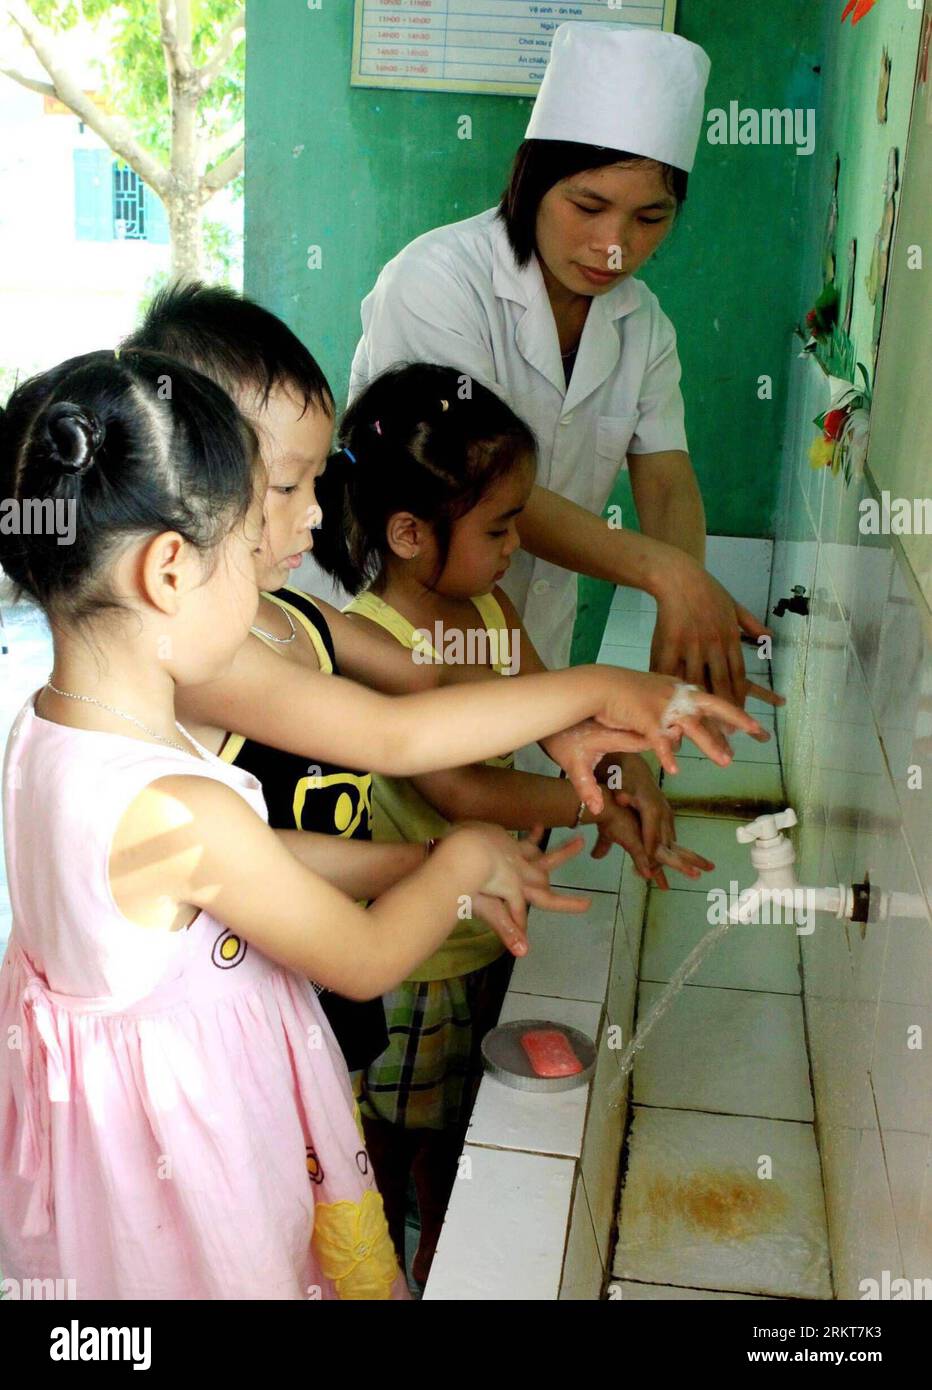 Bildnummer: 58398900  Datum: 28.08.2012  Copyright: imago/Xinhua (120828) -- HANOI, Aug. 28, 2012 (Xinhua) -- A member of Vietnam s health staff instructs children to properly wash hands to prevent seasonal diseases in Vietnam s northern province of Bac Giang, Aug. 28, 2012. Vietnamese government carried out precautionary measures in kindergartens and schools recently to prevent dengue fever, hand-foot-mouth disease, flu and diarrhea. (Xinhua/VNA) VIETNAM-BAC GIANG-DISEASE-PREVENTION PUBLICATIONxNOTxINxCHN Gesellschaft Arbeitswelten Krankenschwester Kinder Bildung Schule Schüler Hygiene x0x xs Stock Photo